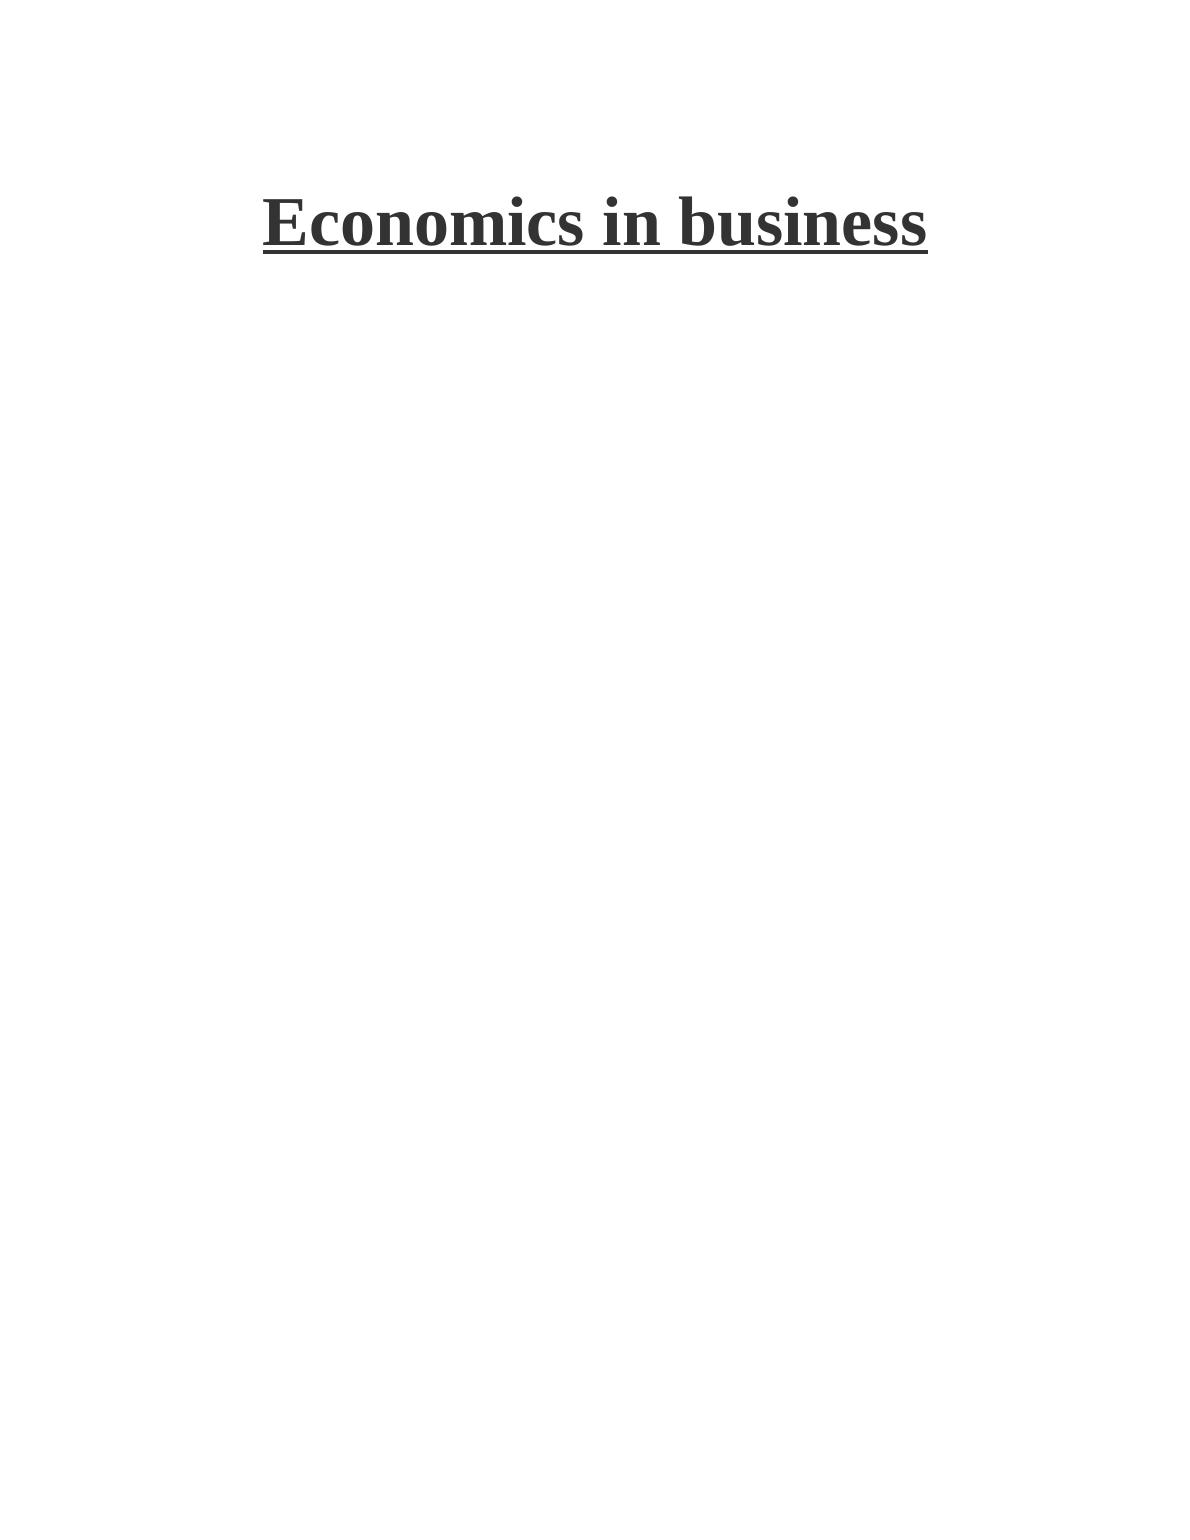 Business Economics Assignment Solution (Doc)_1